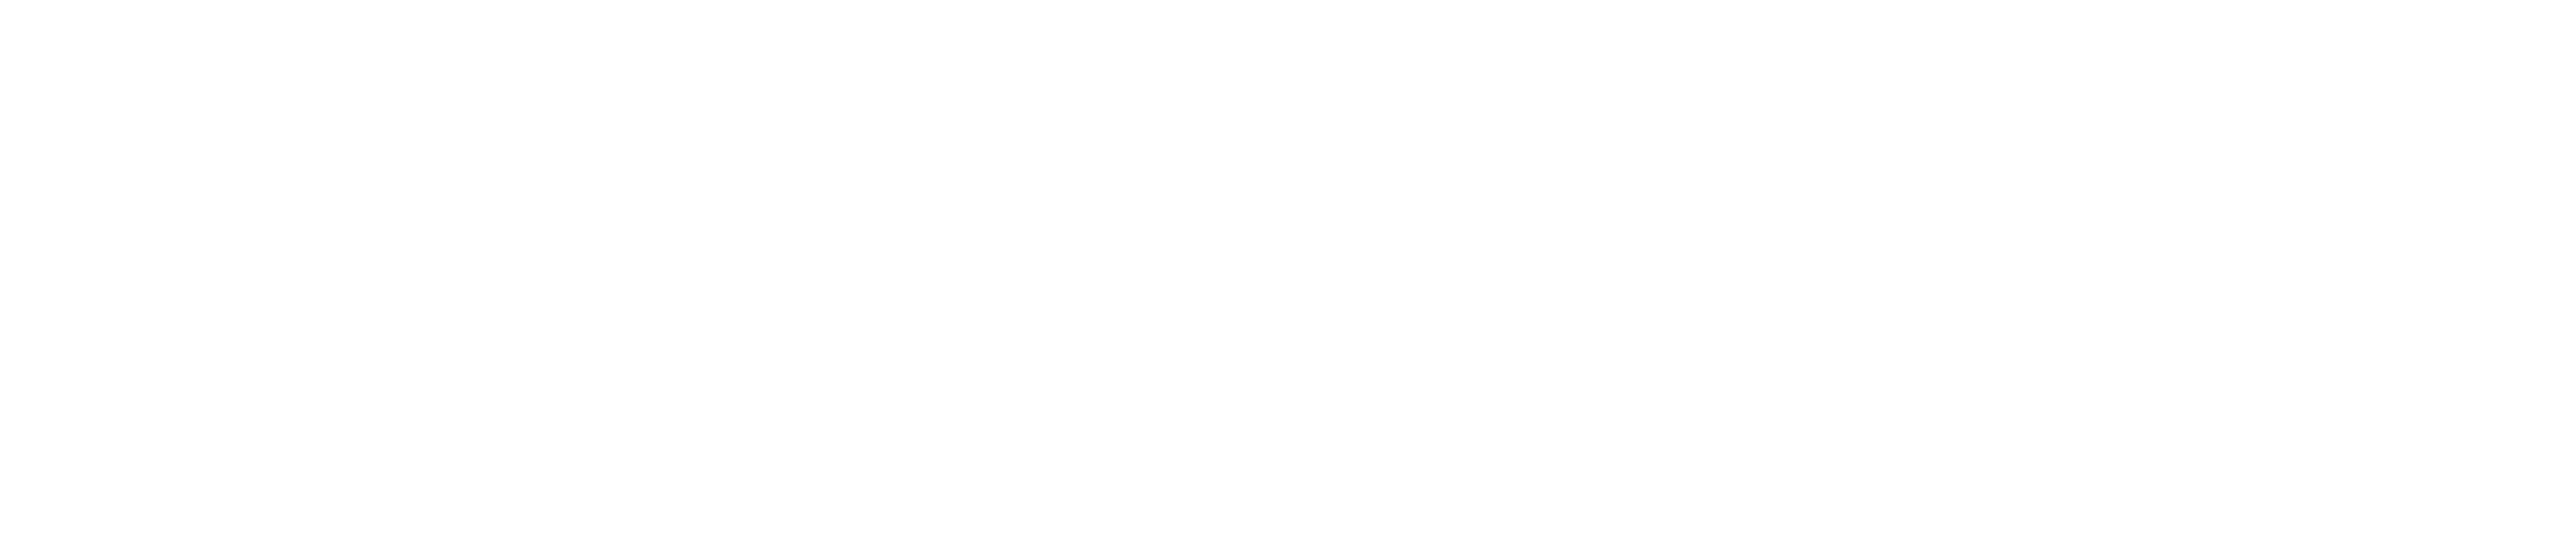 Virtual Valley